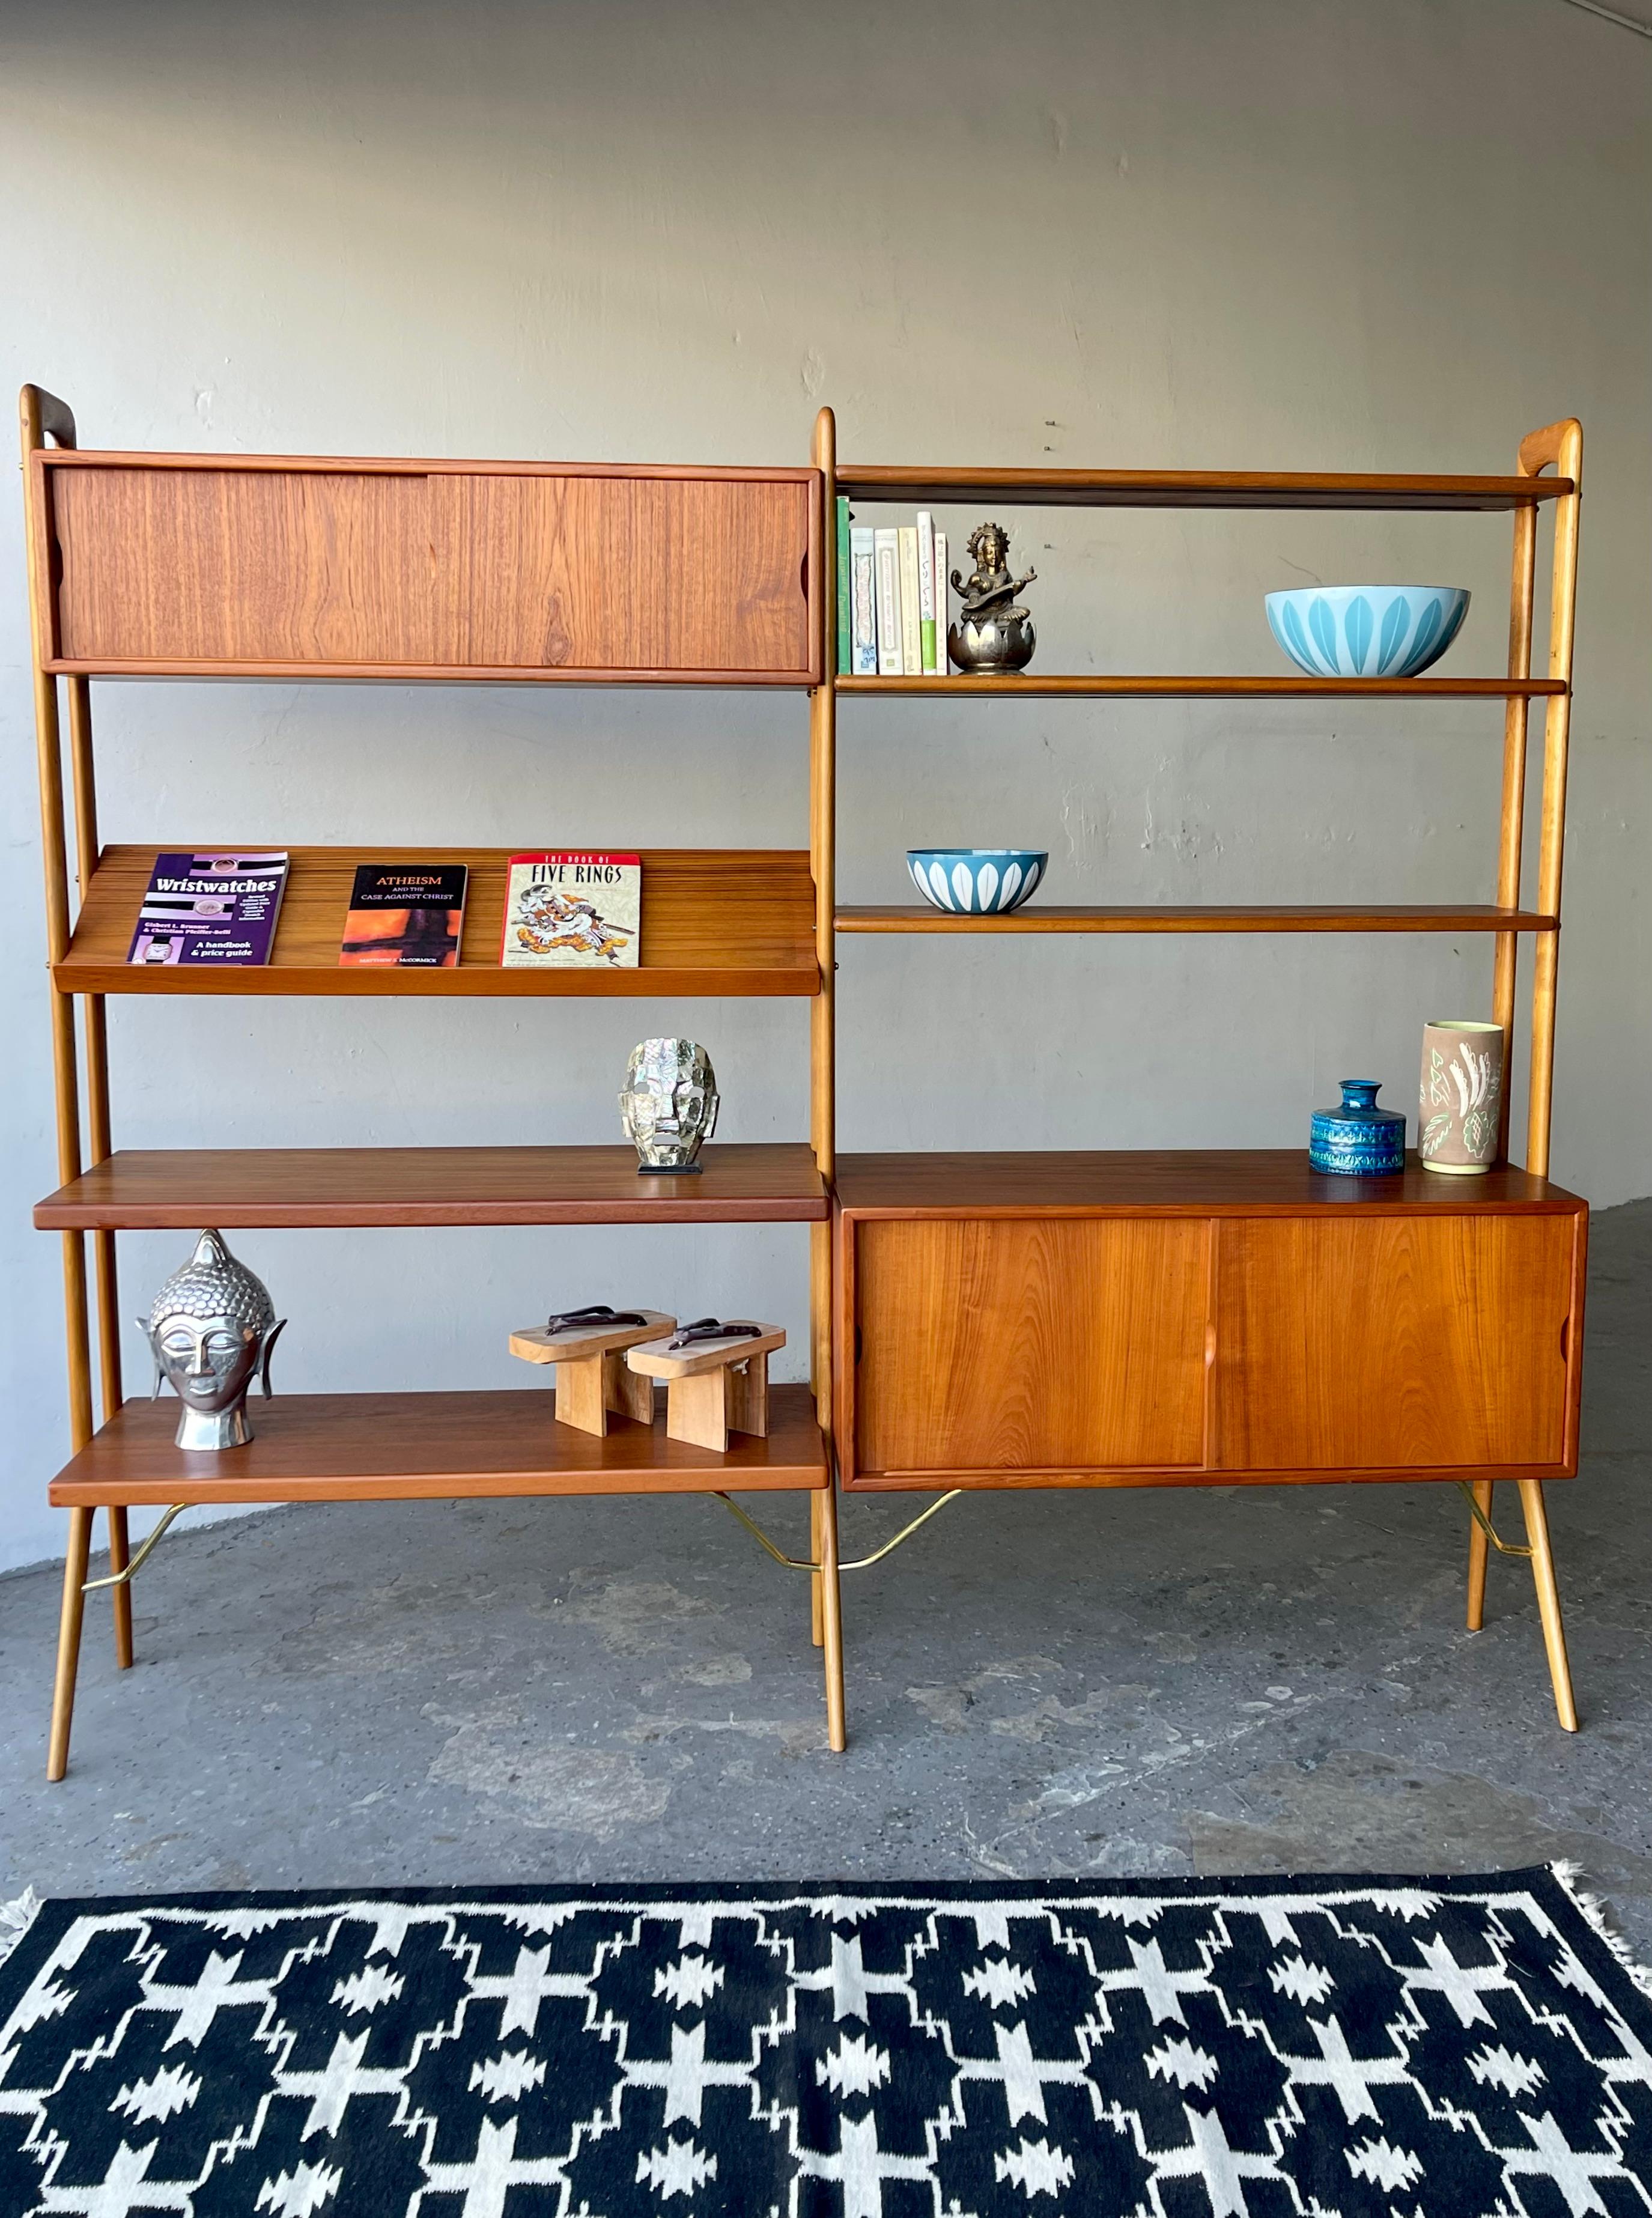 2 Bay Danish Modern Kurt Ostervig Teak Wall Unit Room Divider or Book Shelves #2 6